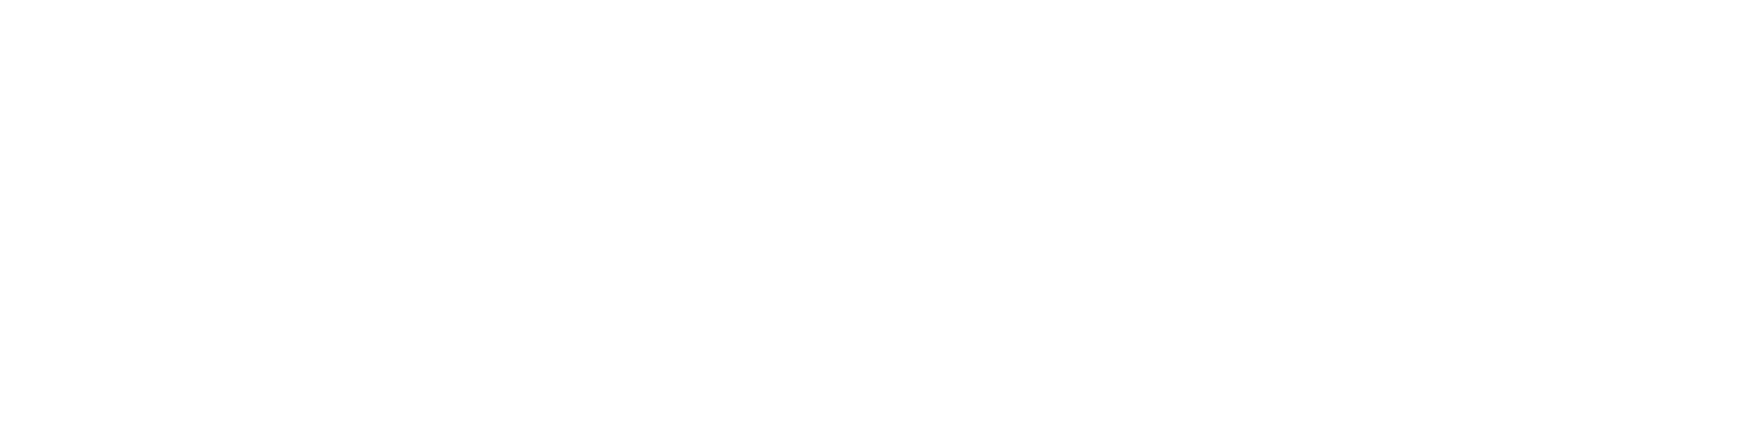 XPEL Logo groß für dunkle Hintergründe (transparentes PNG)